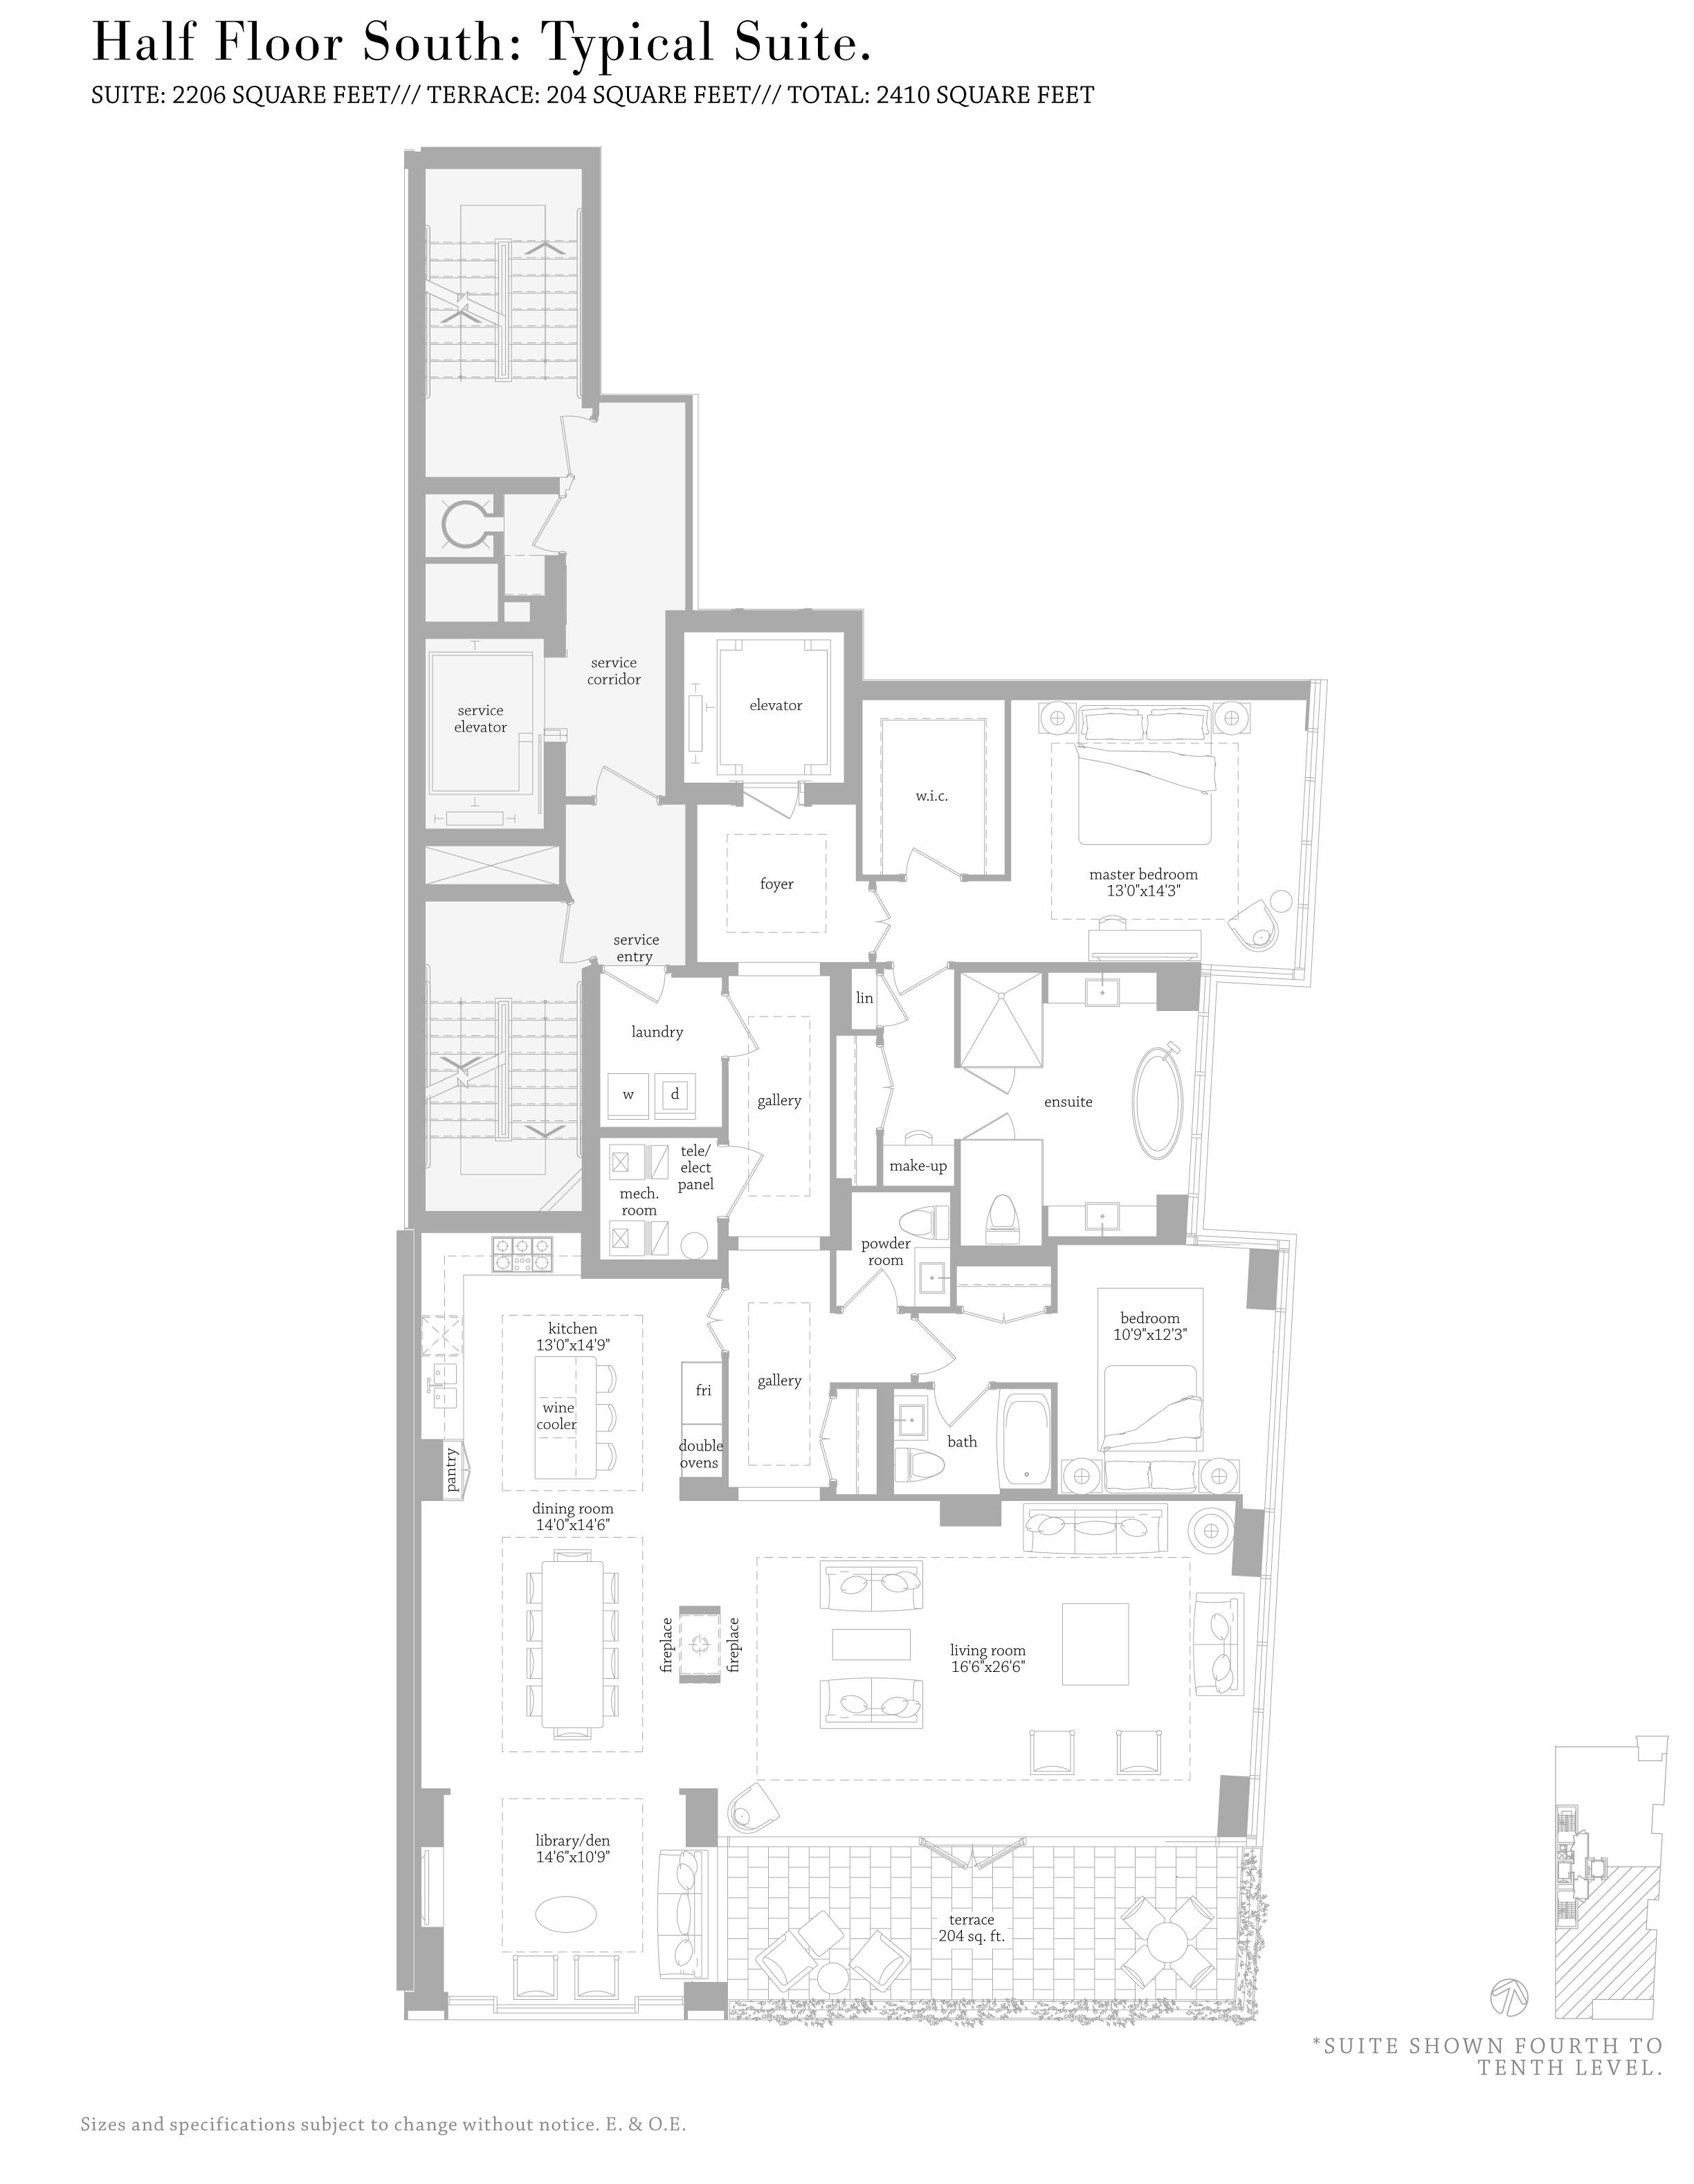 MUSEUM HOUSE FLOORPLANS - HALF FLOOR 2,200 SQ FT